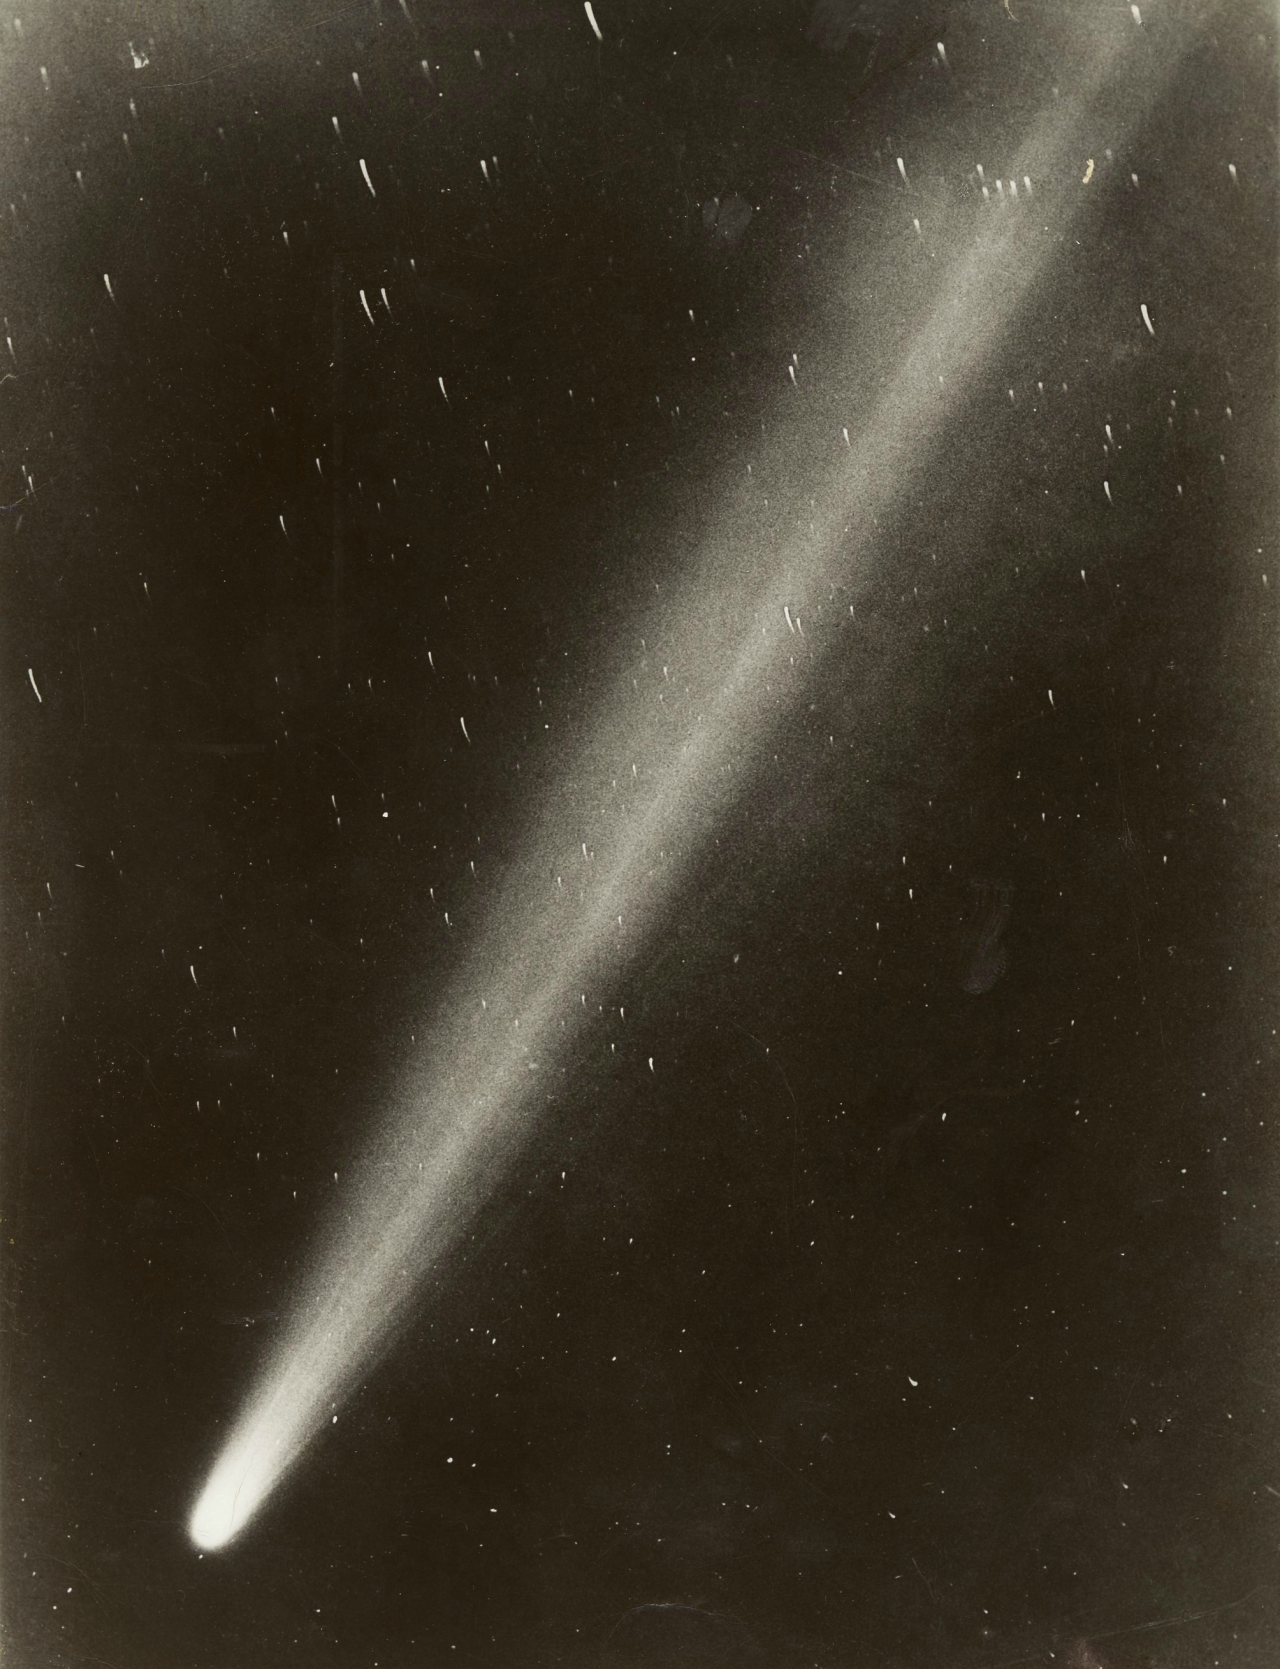 Yerkes Observatory Halleys Comet May 4 1910